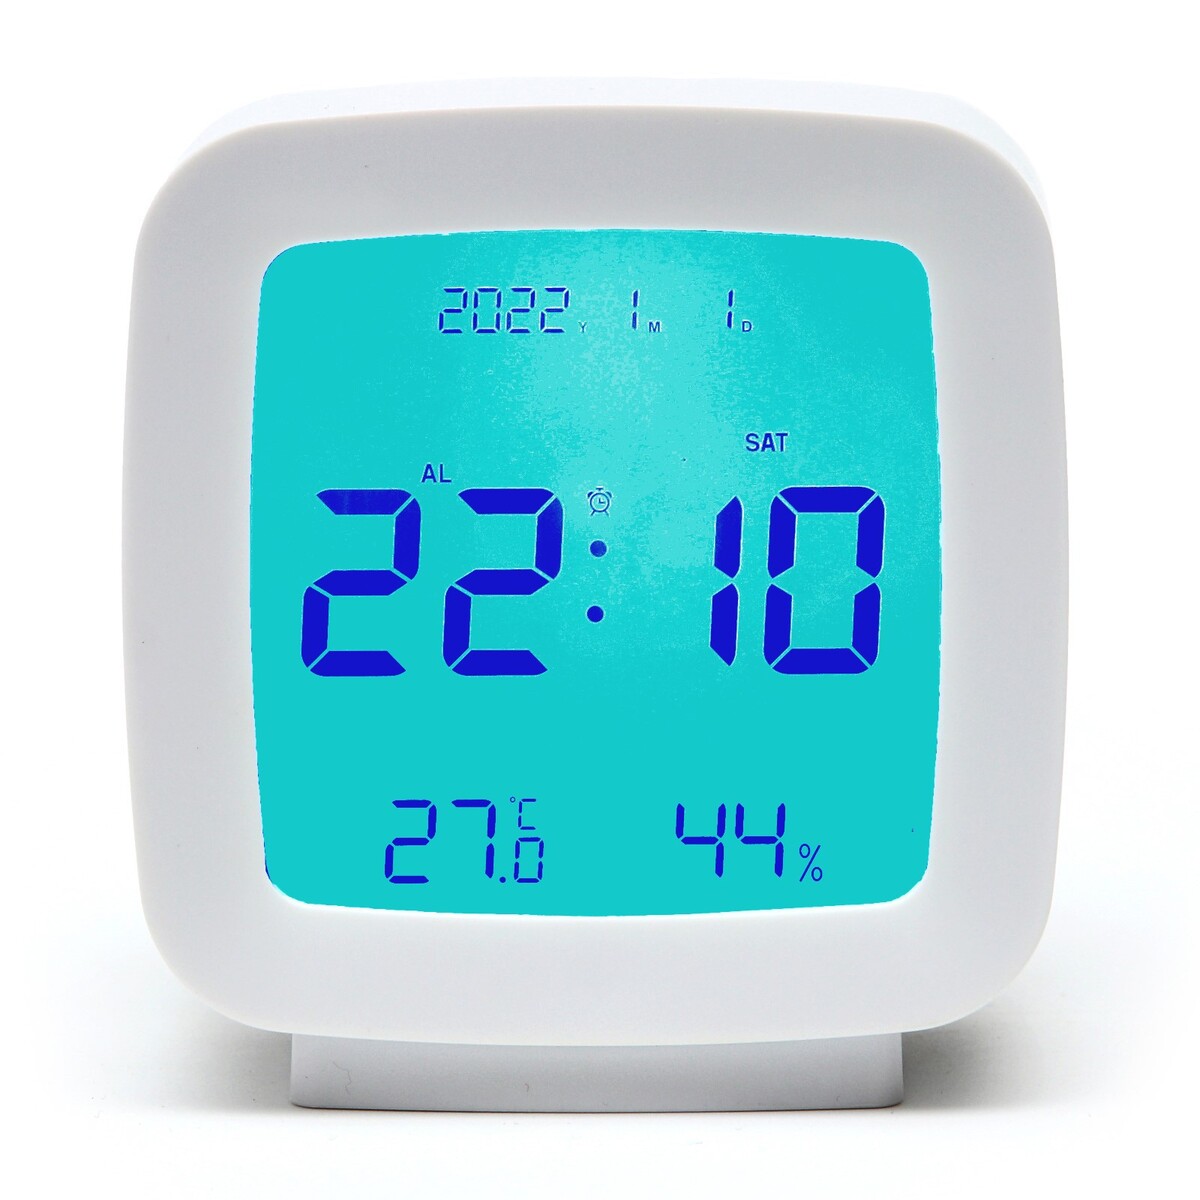 Часы - будильник электронные настольные: термометр, календарь, гигрометр, 7.8 х 8.3 см часы настольные электронные с проекцией будильник термометр календарь 19 6 х 6 5 см